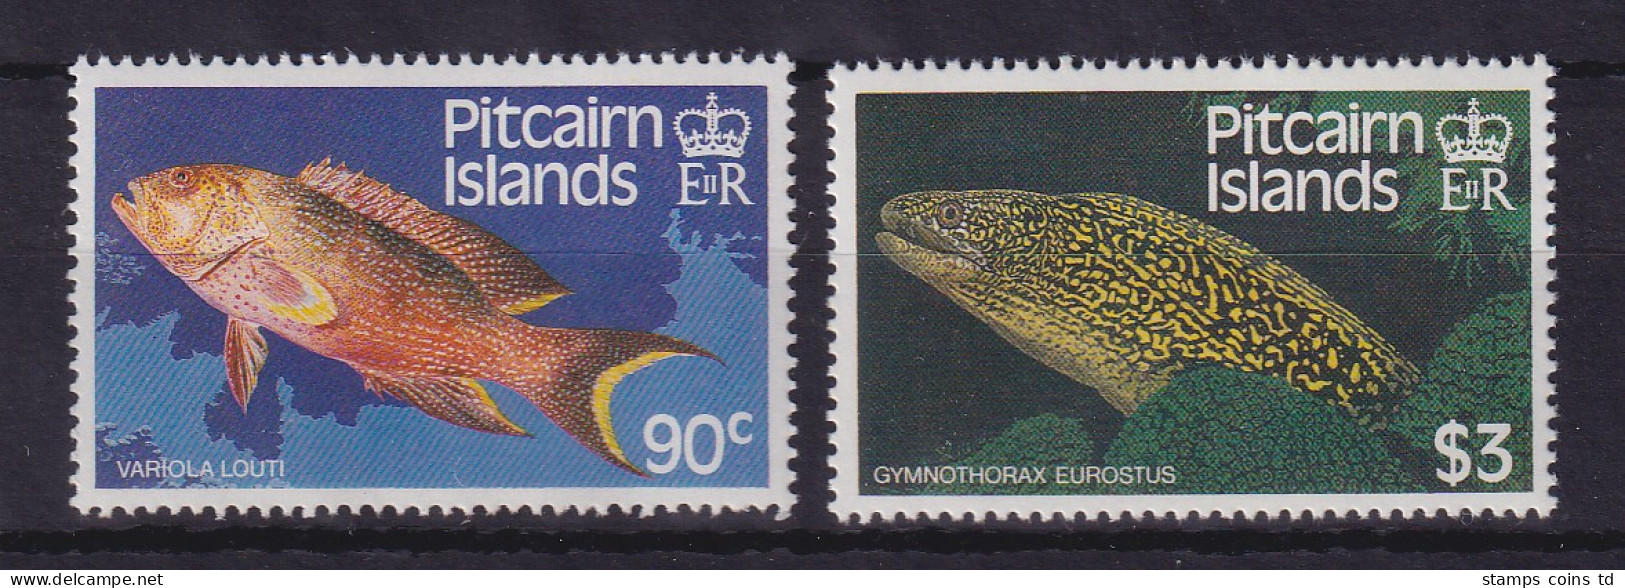 Pitcairn Islands 1988 Fische Mi.-Nr. 305-306 Postfrisch ** - Pitcairn Islands